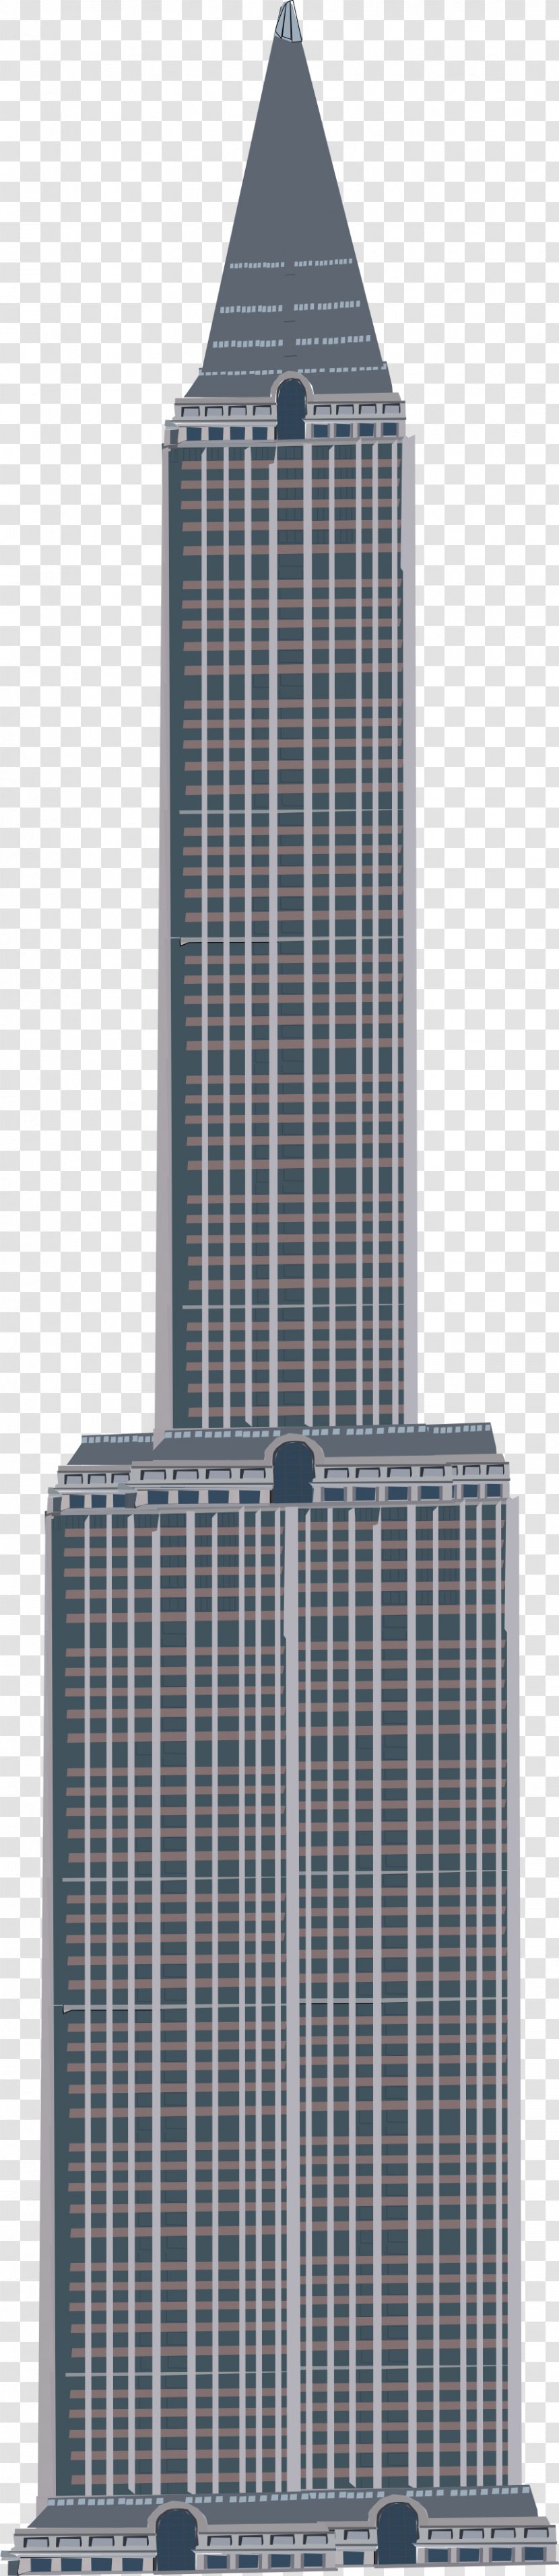 Skyscraper Facade Corporate Headquarters Building - Corporation - Empire State Buildin Transparent PNG